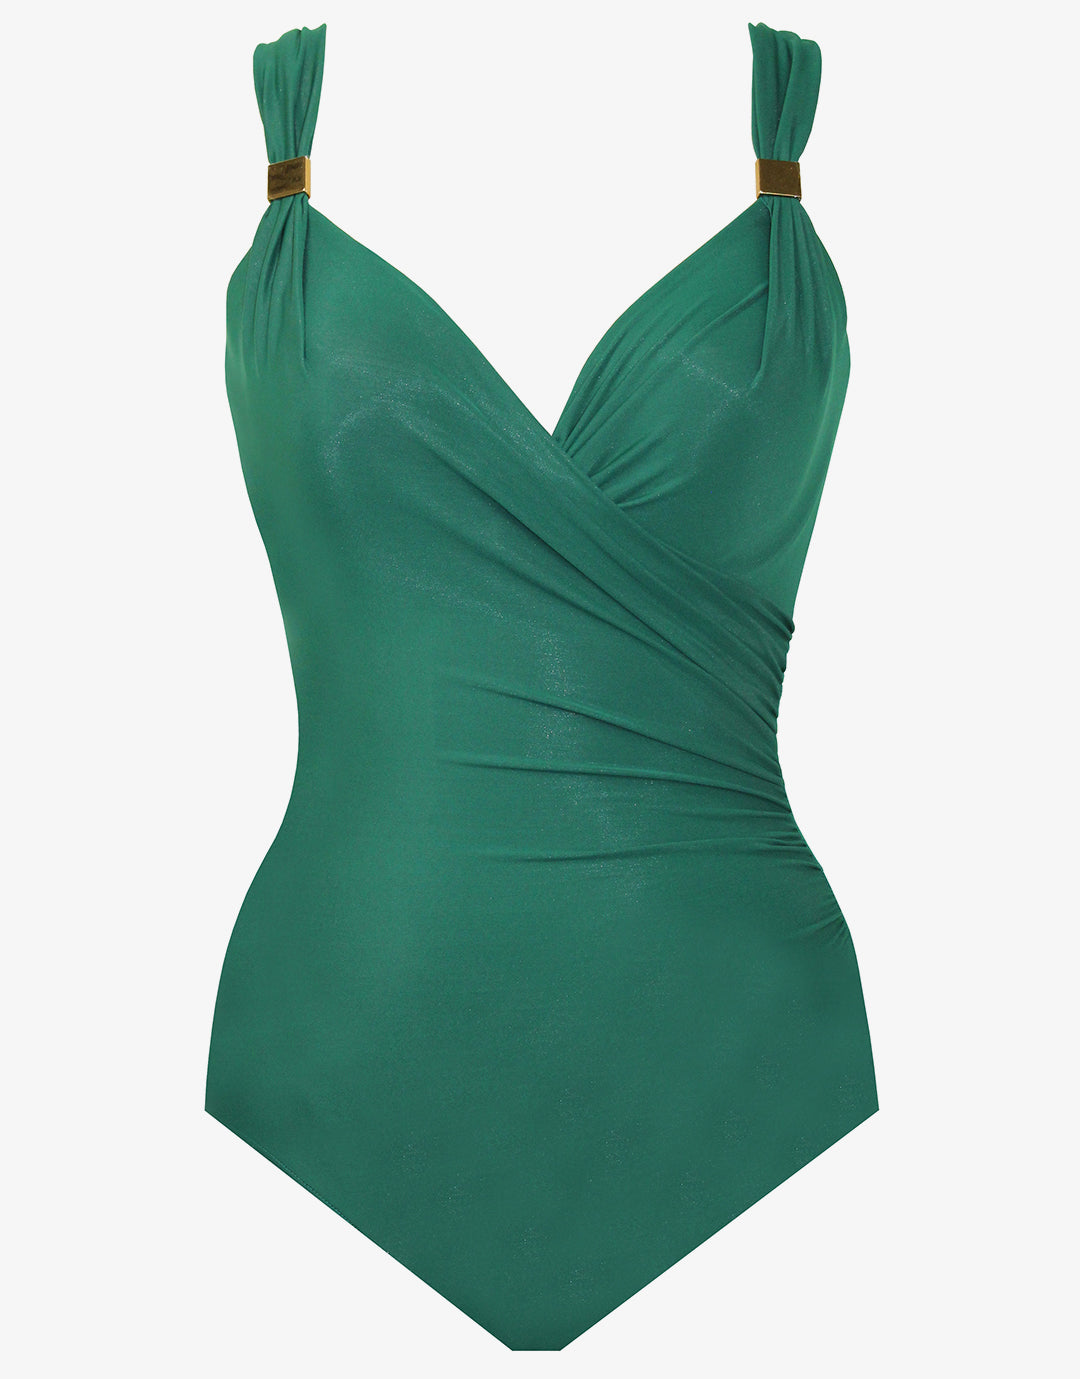 Razzle Dazzle Siren Swimsuit - Malachite Green - Simply Beach UK